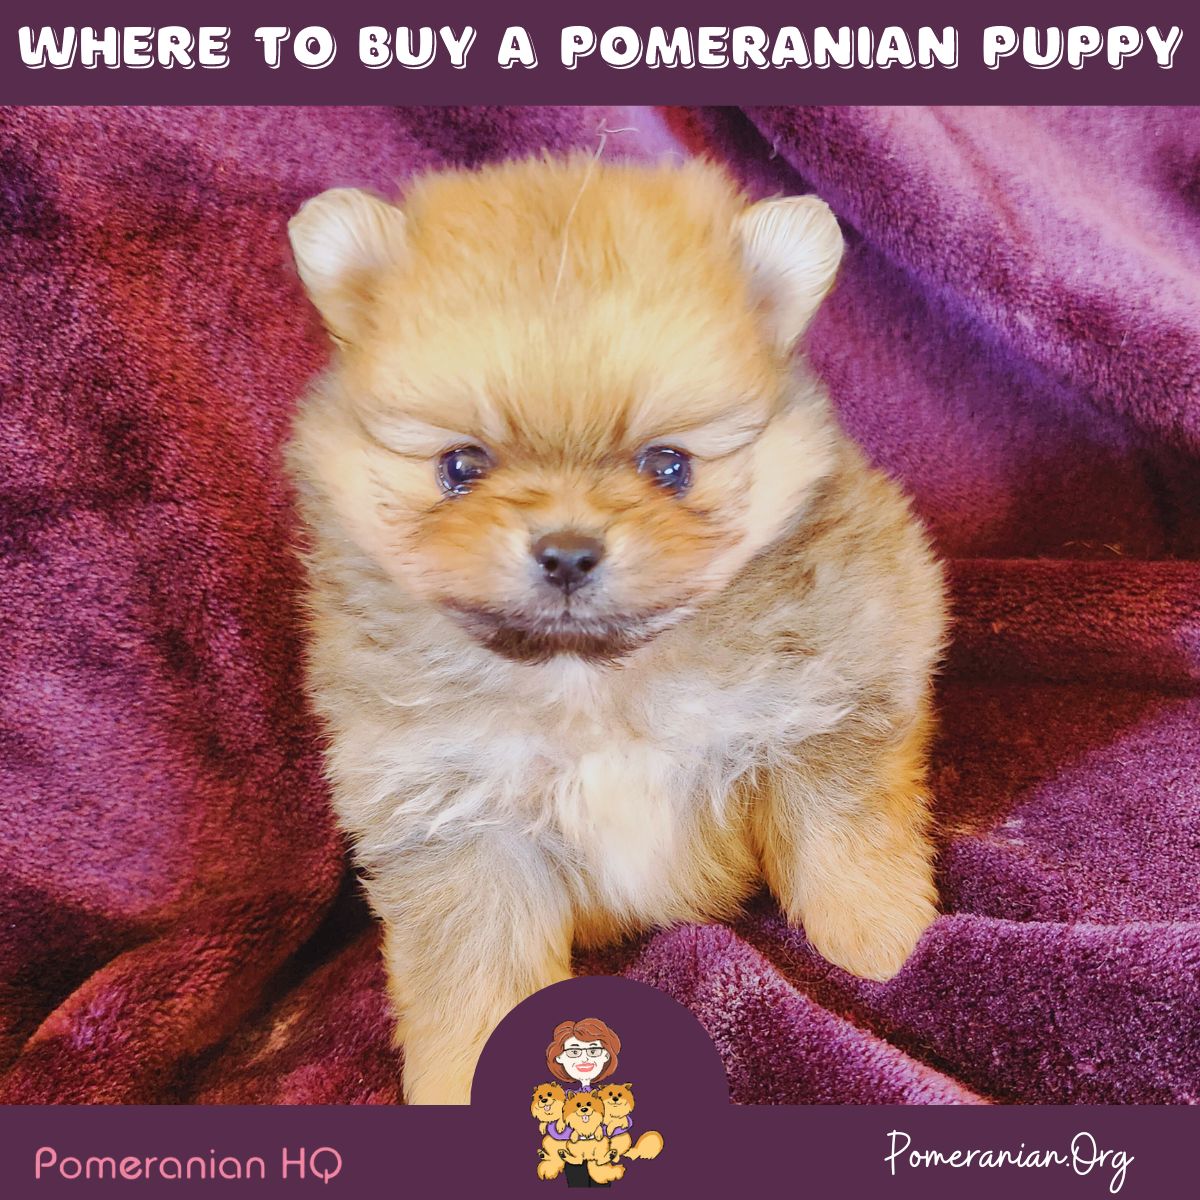 Where to Buy a Pomeranian Puppy